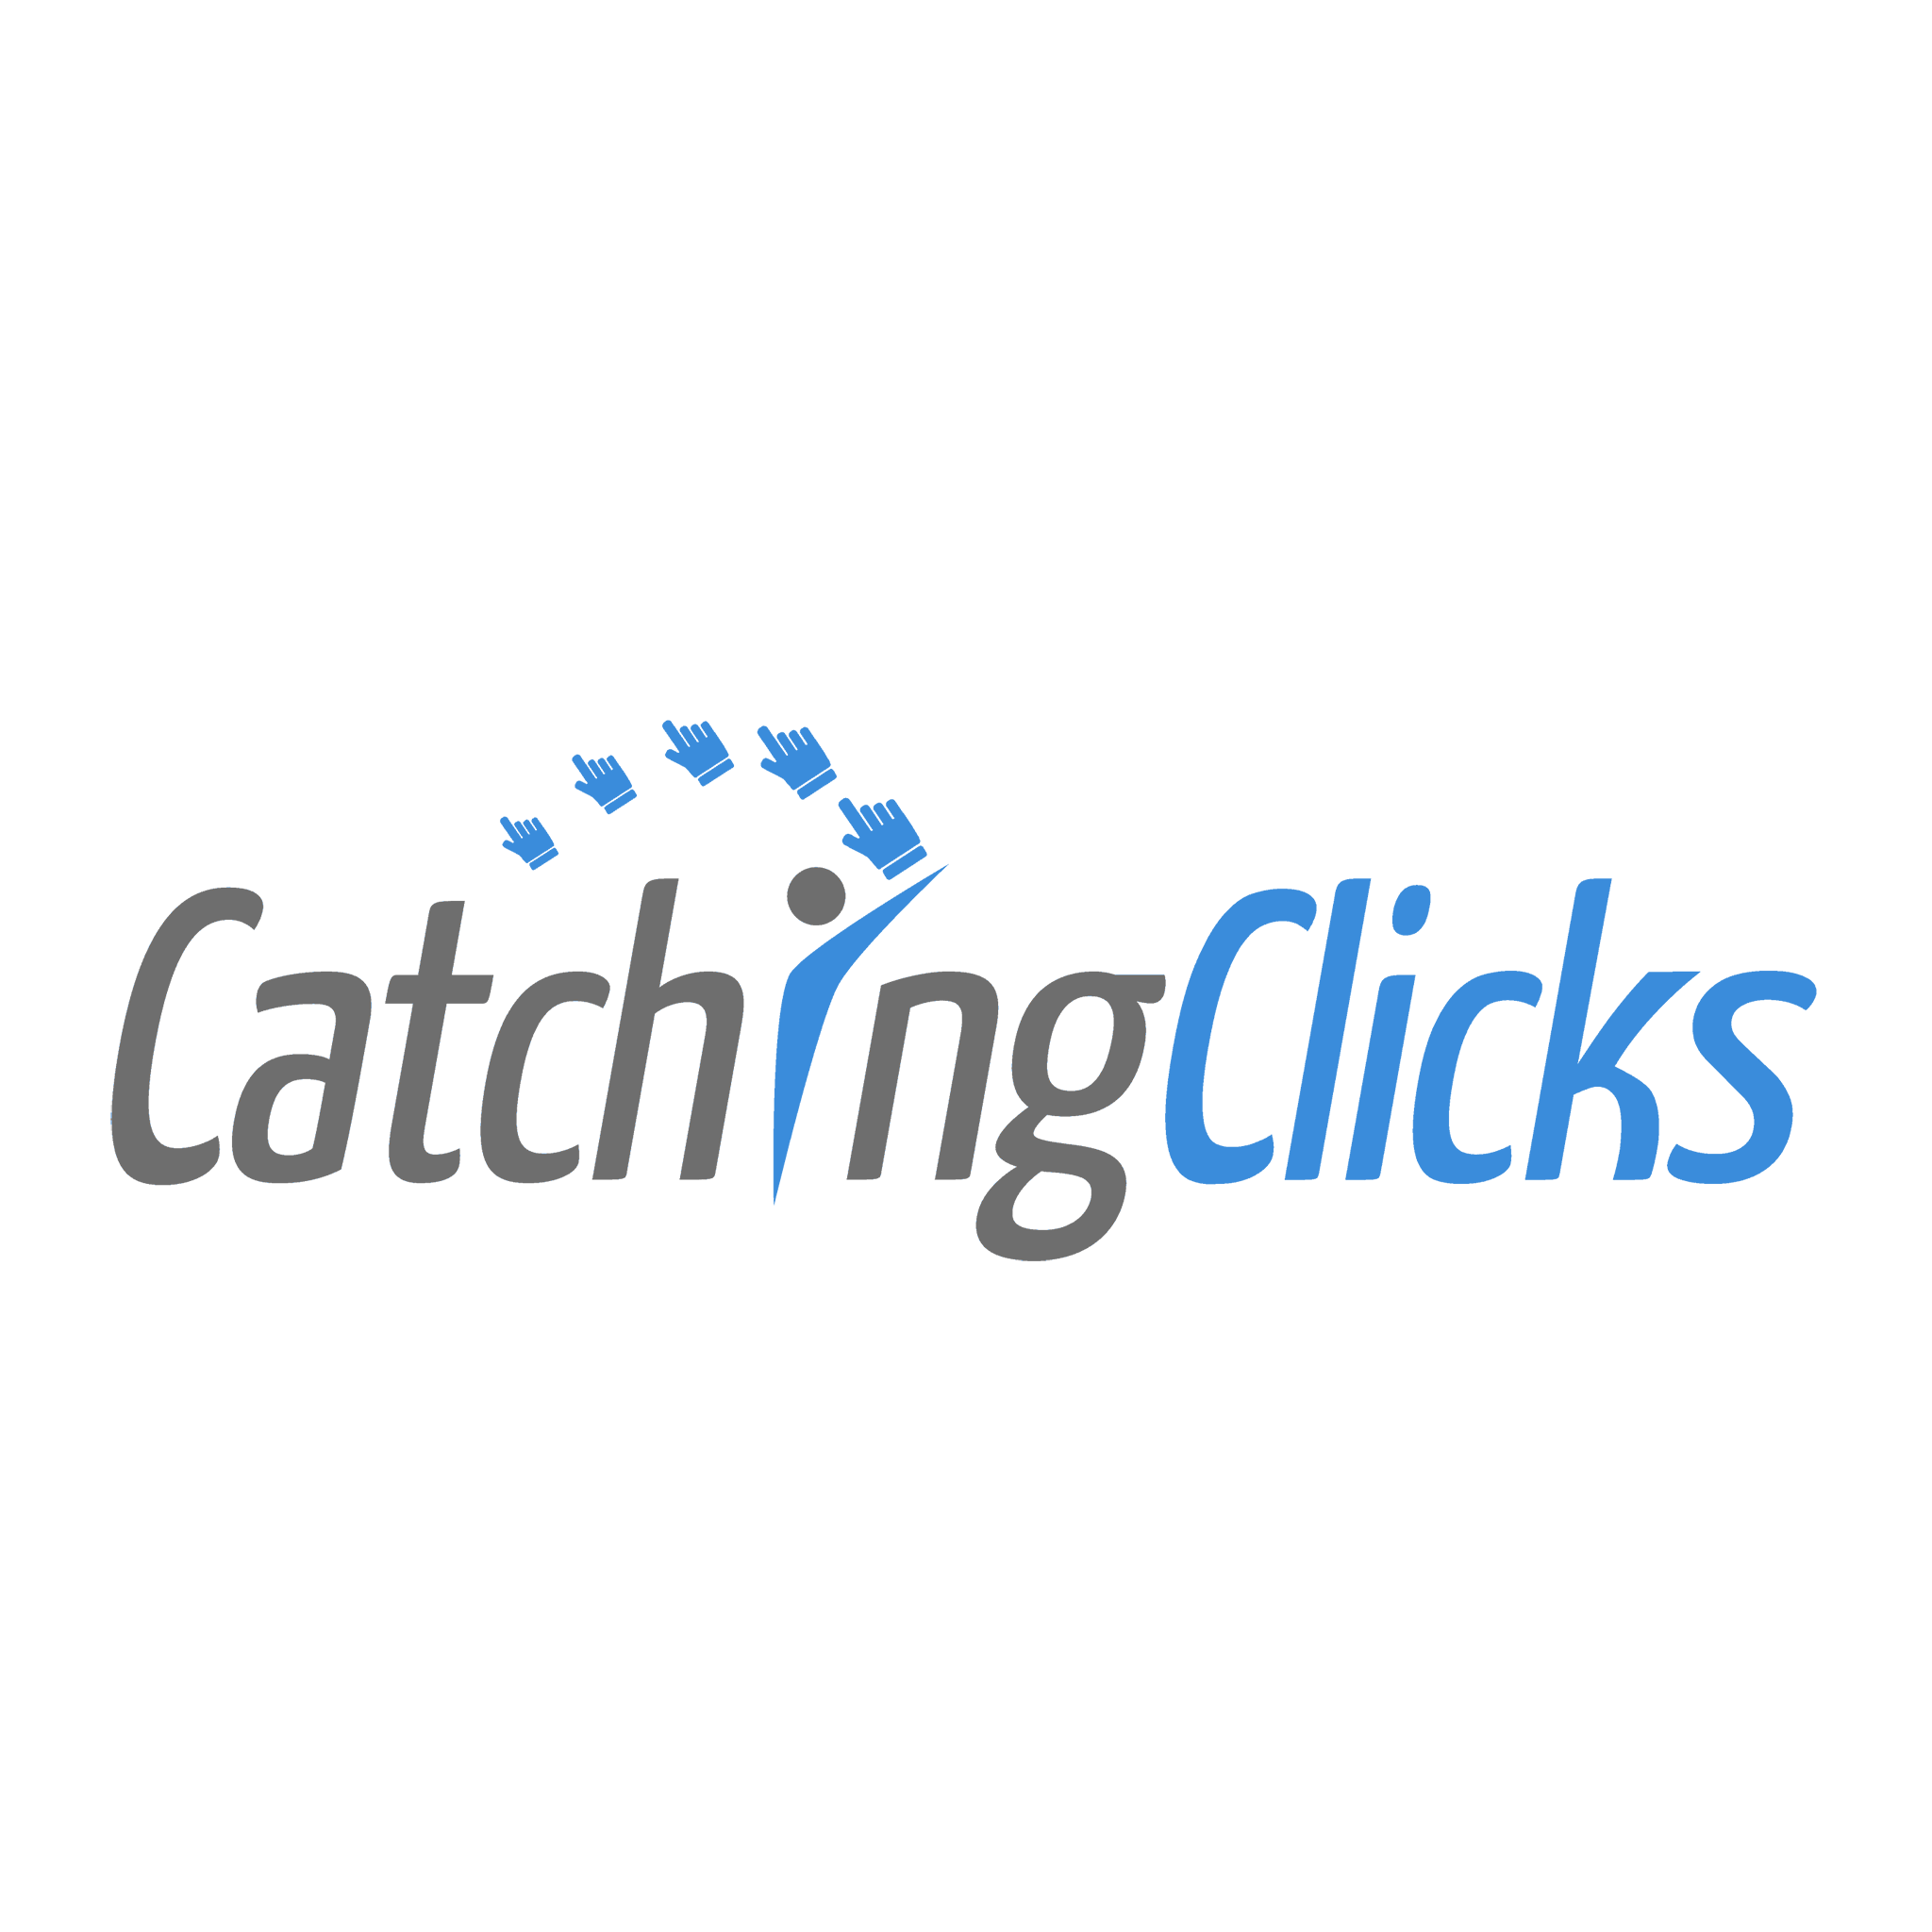 catching-clicks